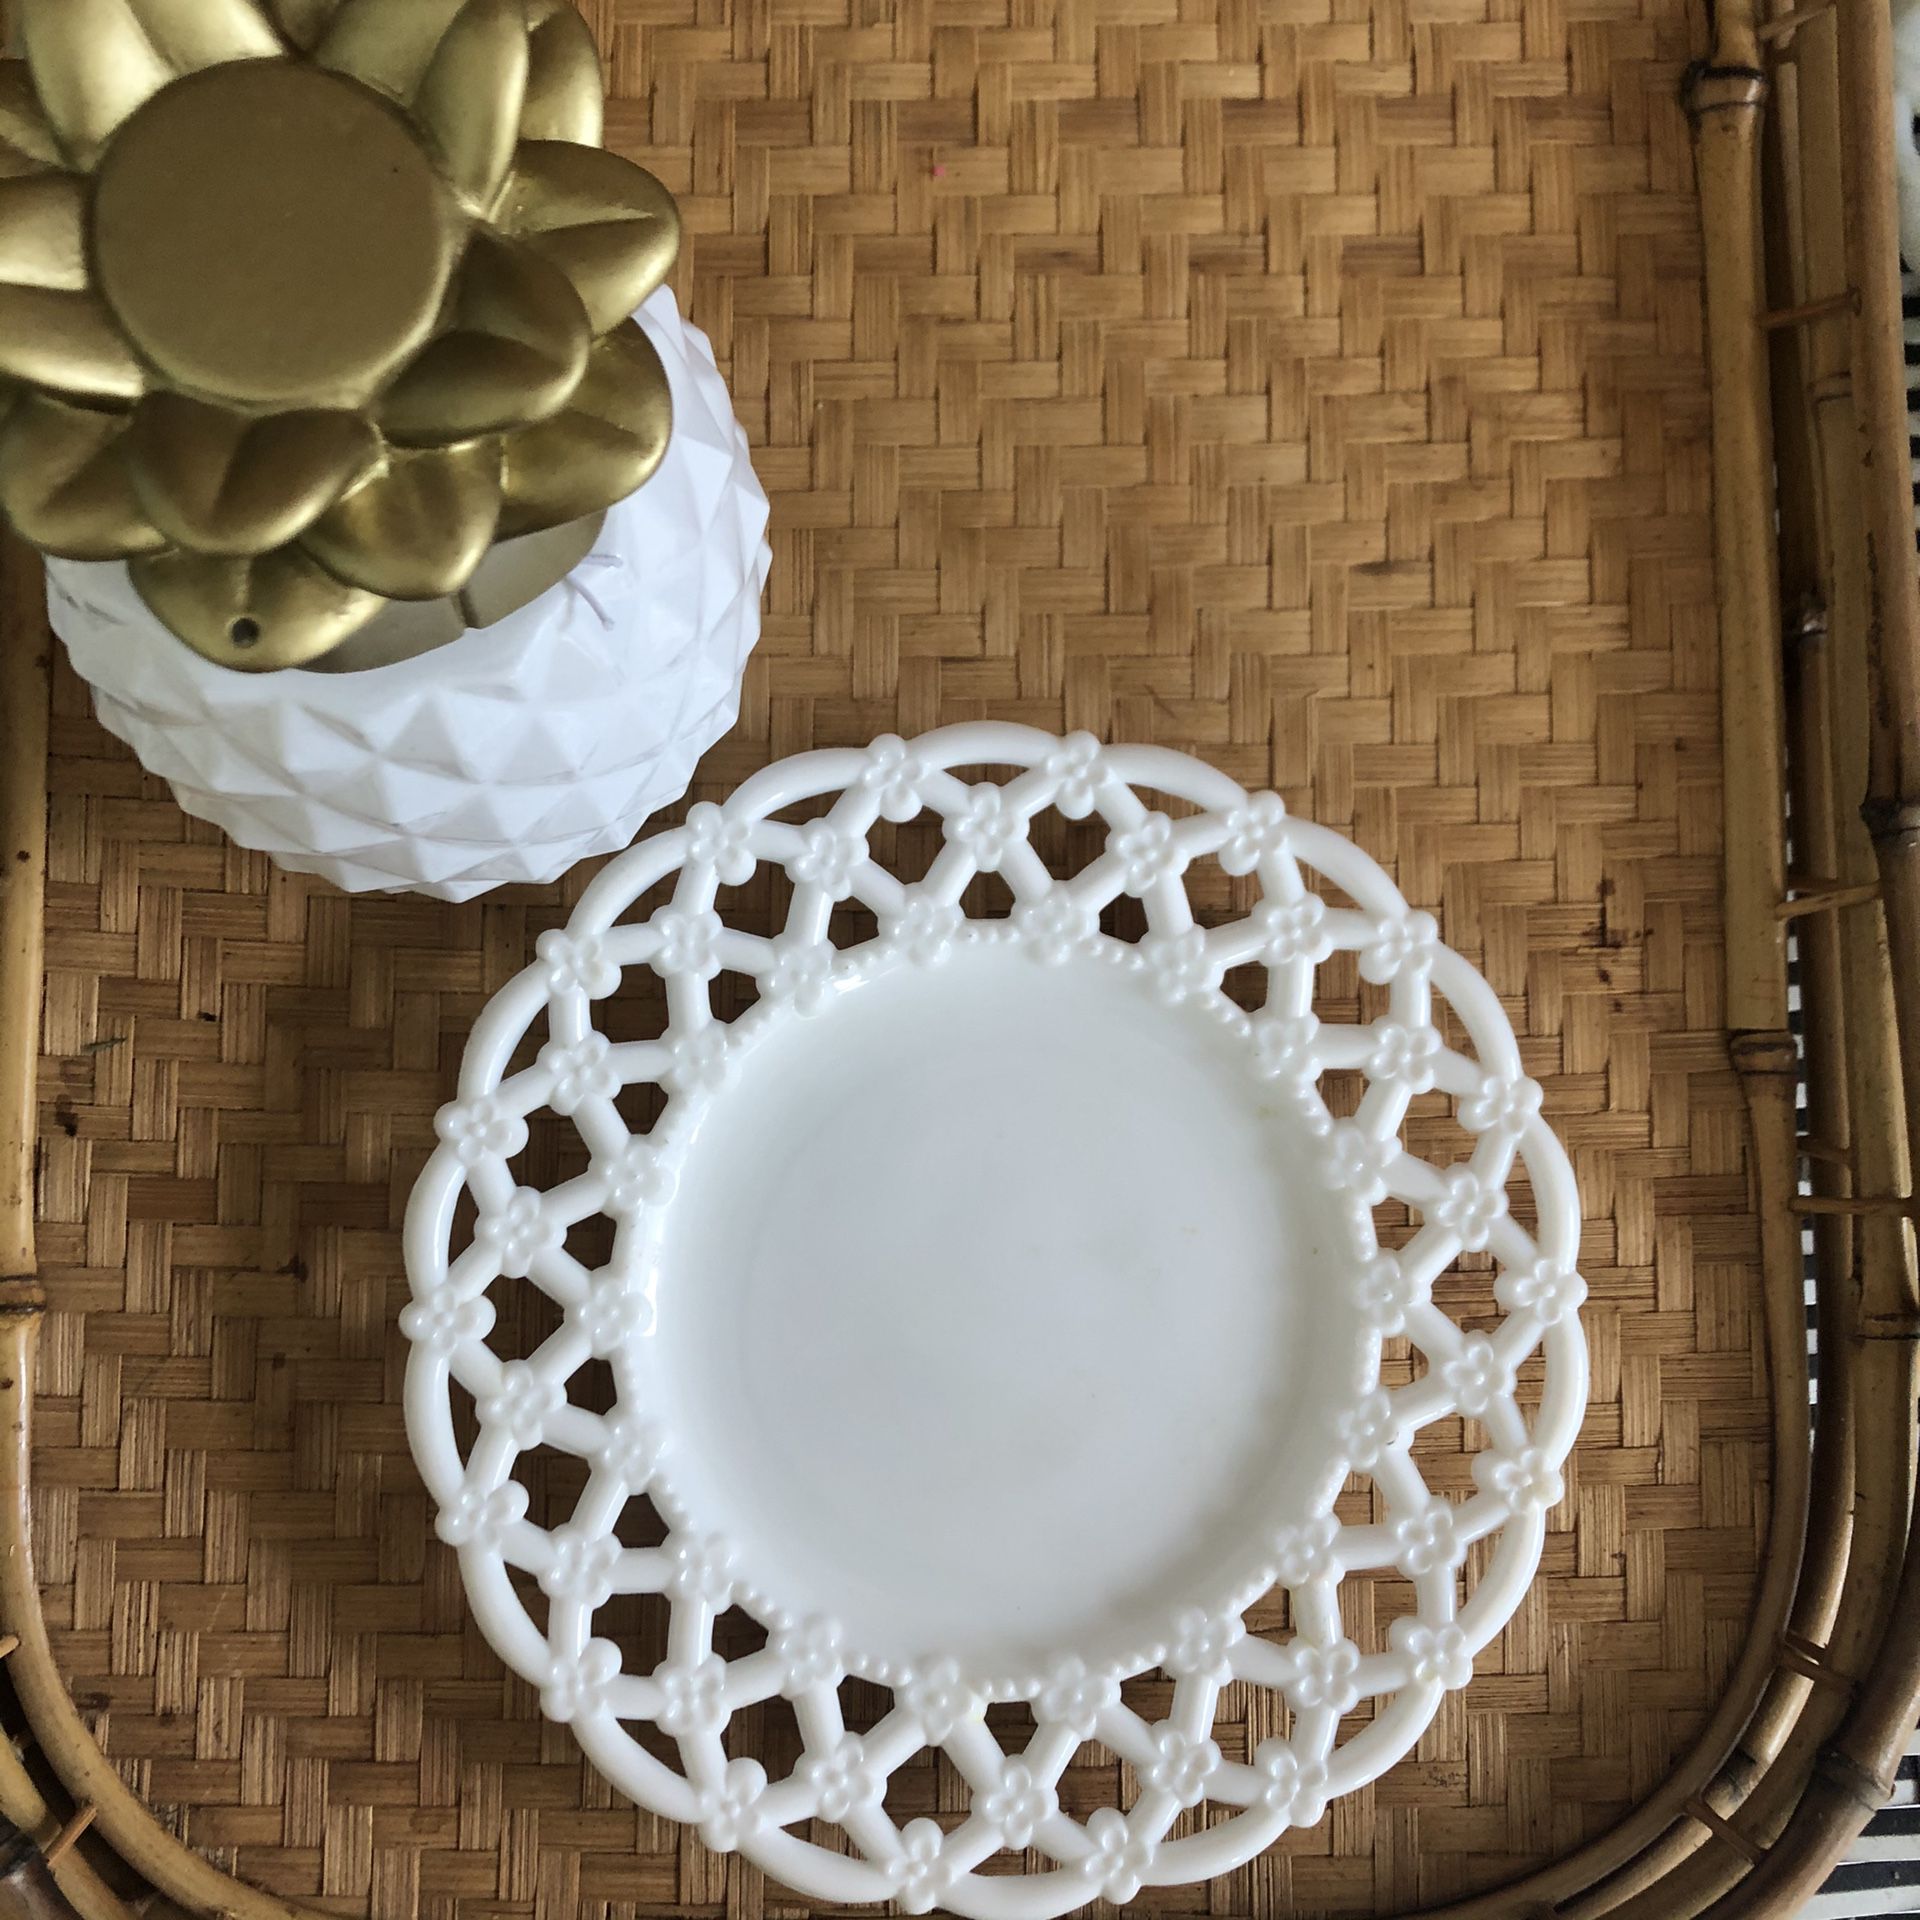 Vintage milk glass lattice pattern plate